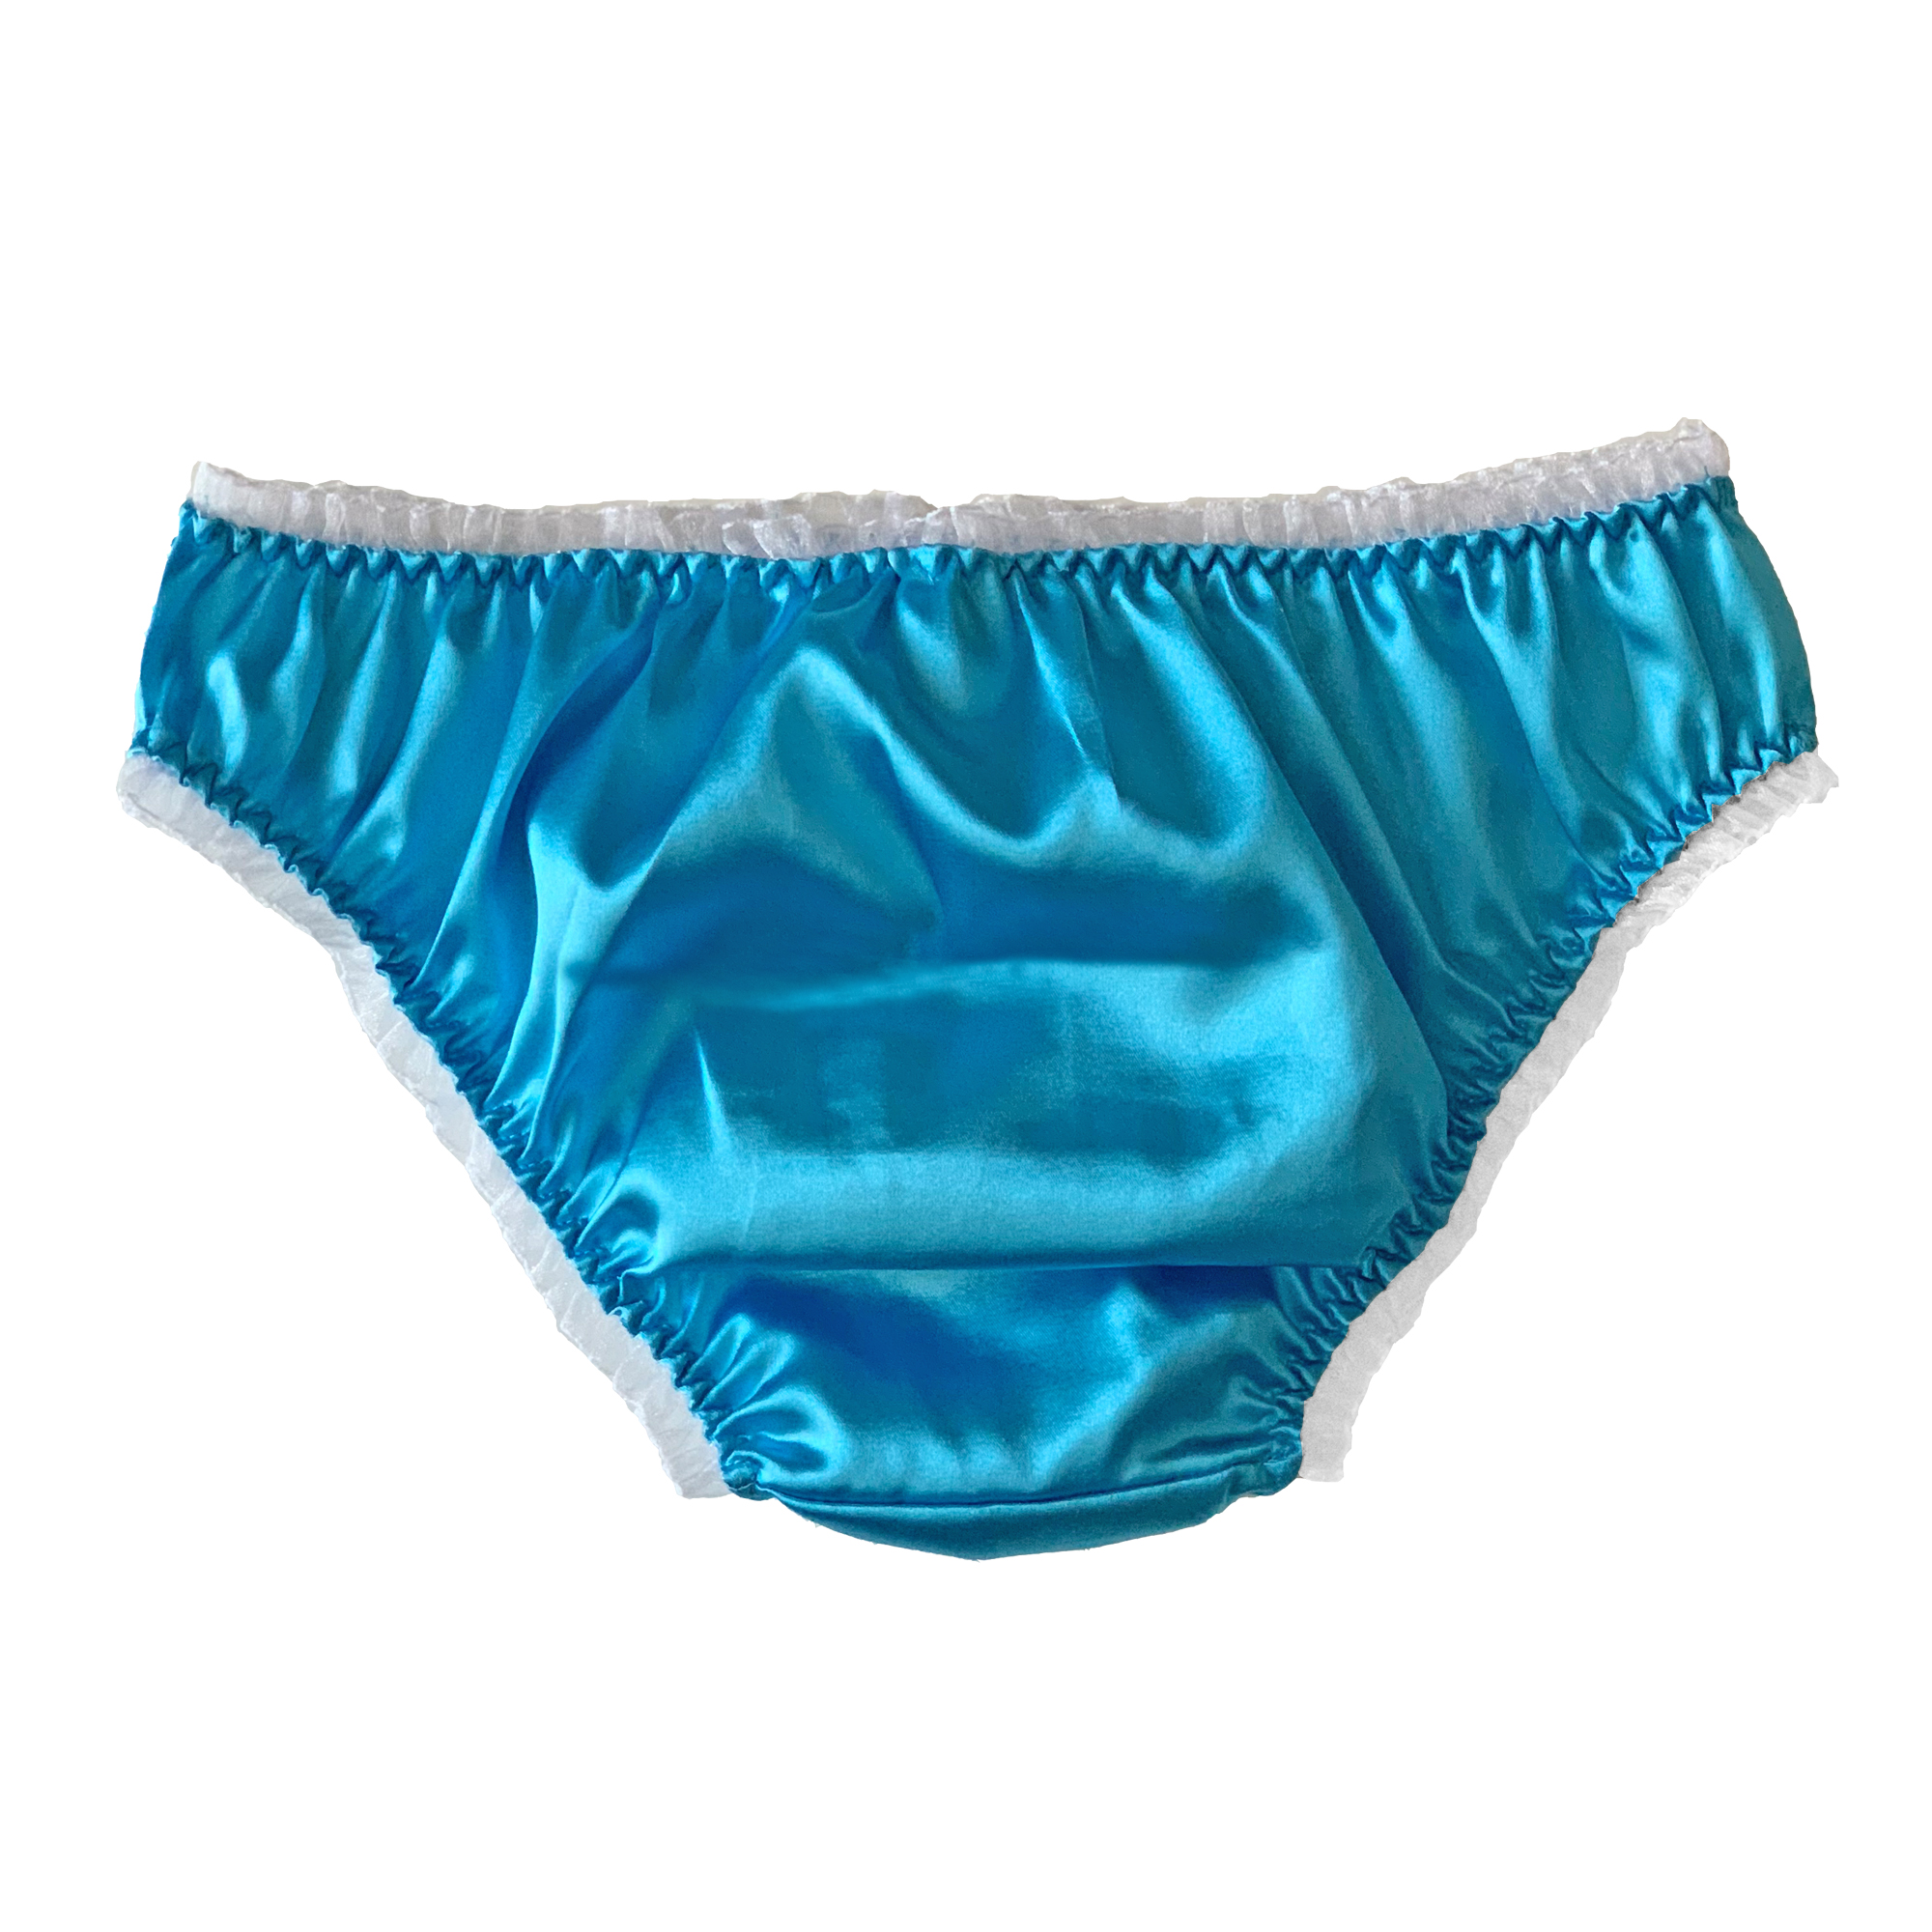 Aqua Blue Satin Frilly Sissy Panties Bikini Knicker Underwear Briefs ...